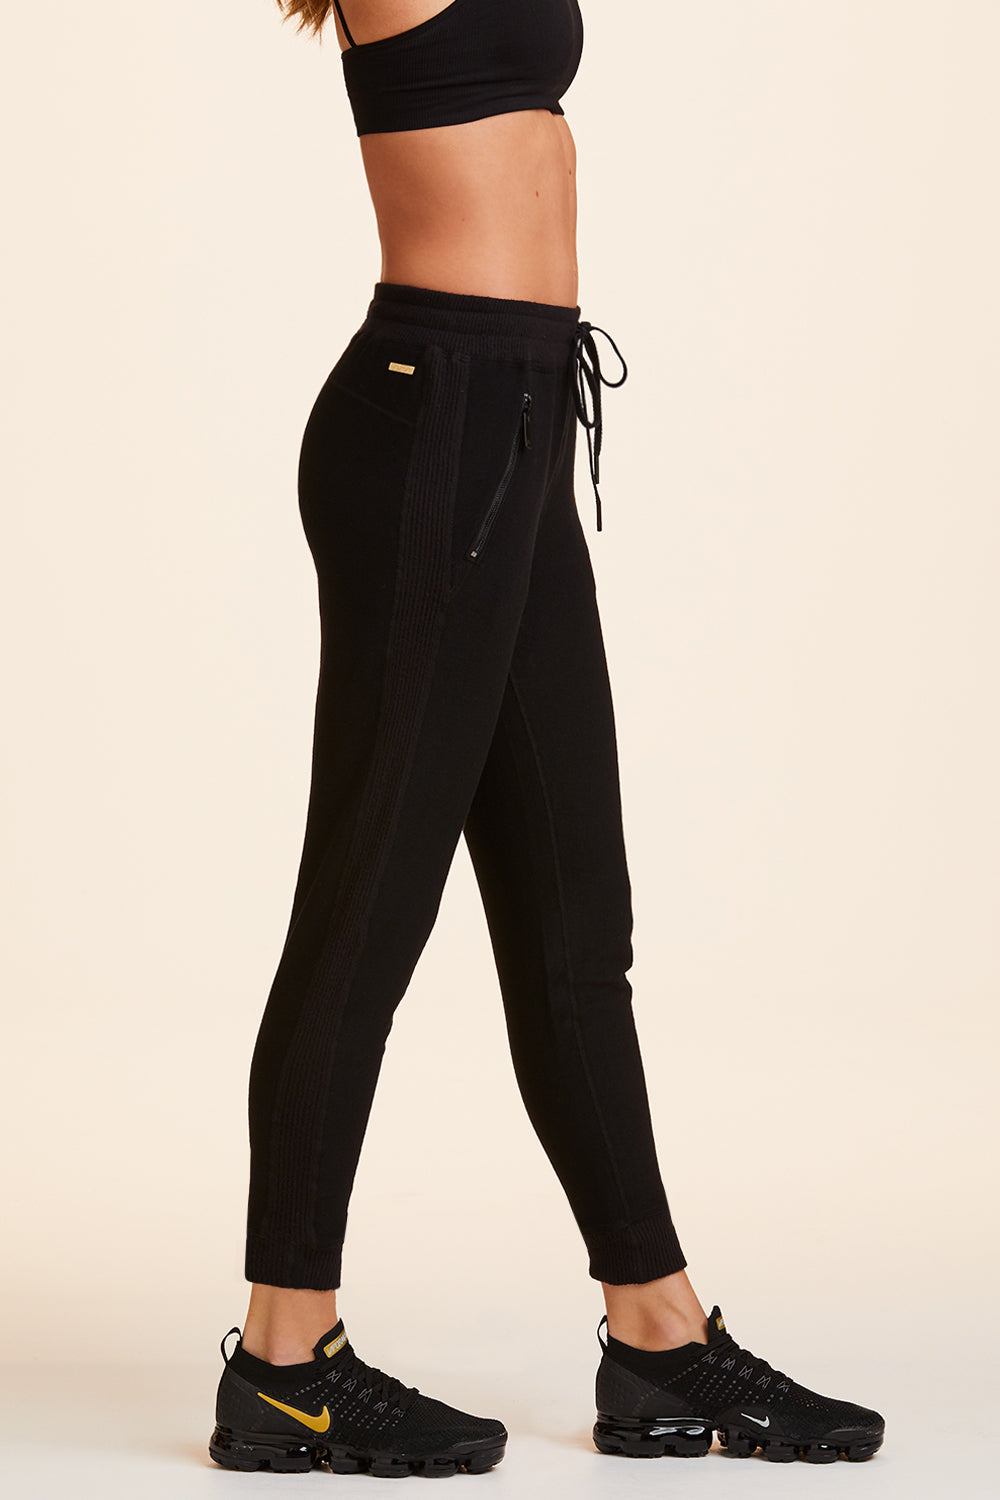 Side view of Alala Women's Luxury Athleisure black sweatpant